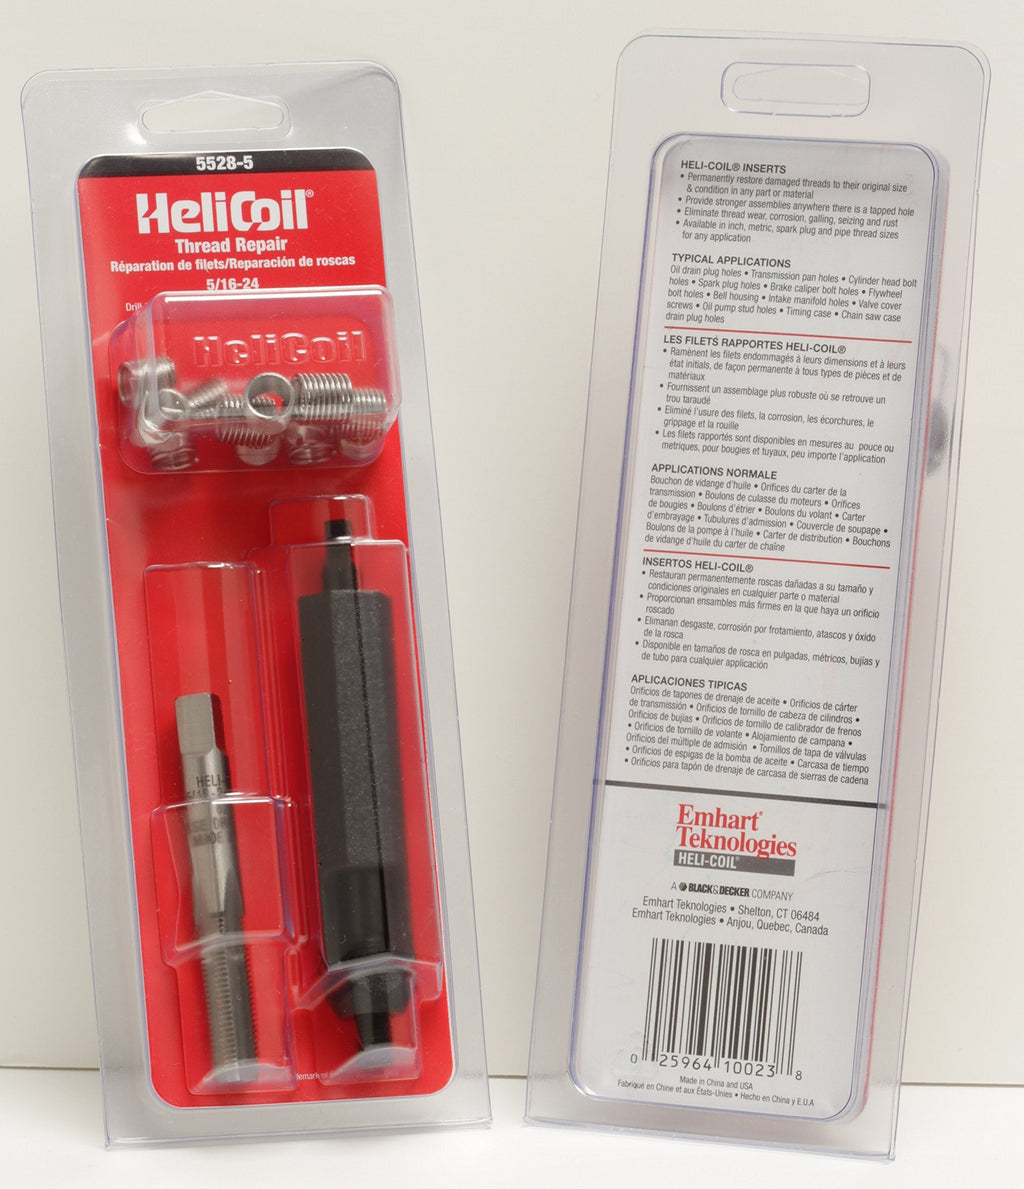  [AUSTRALIA] - Helicoil 5528-5 5/16-24 Inch Fine Thread Repair Kit